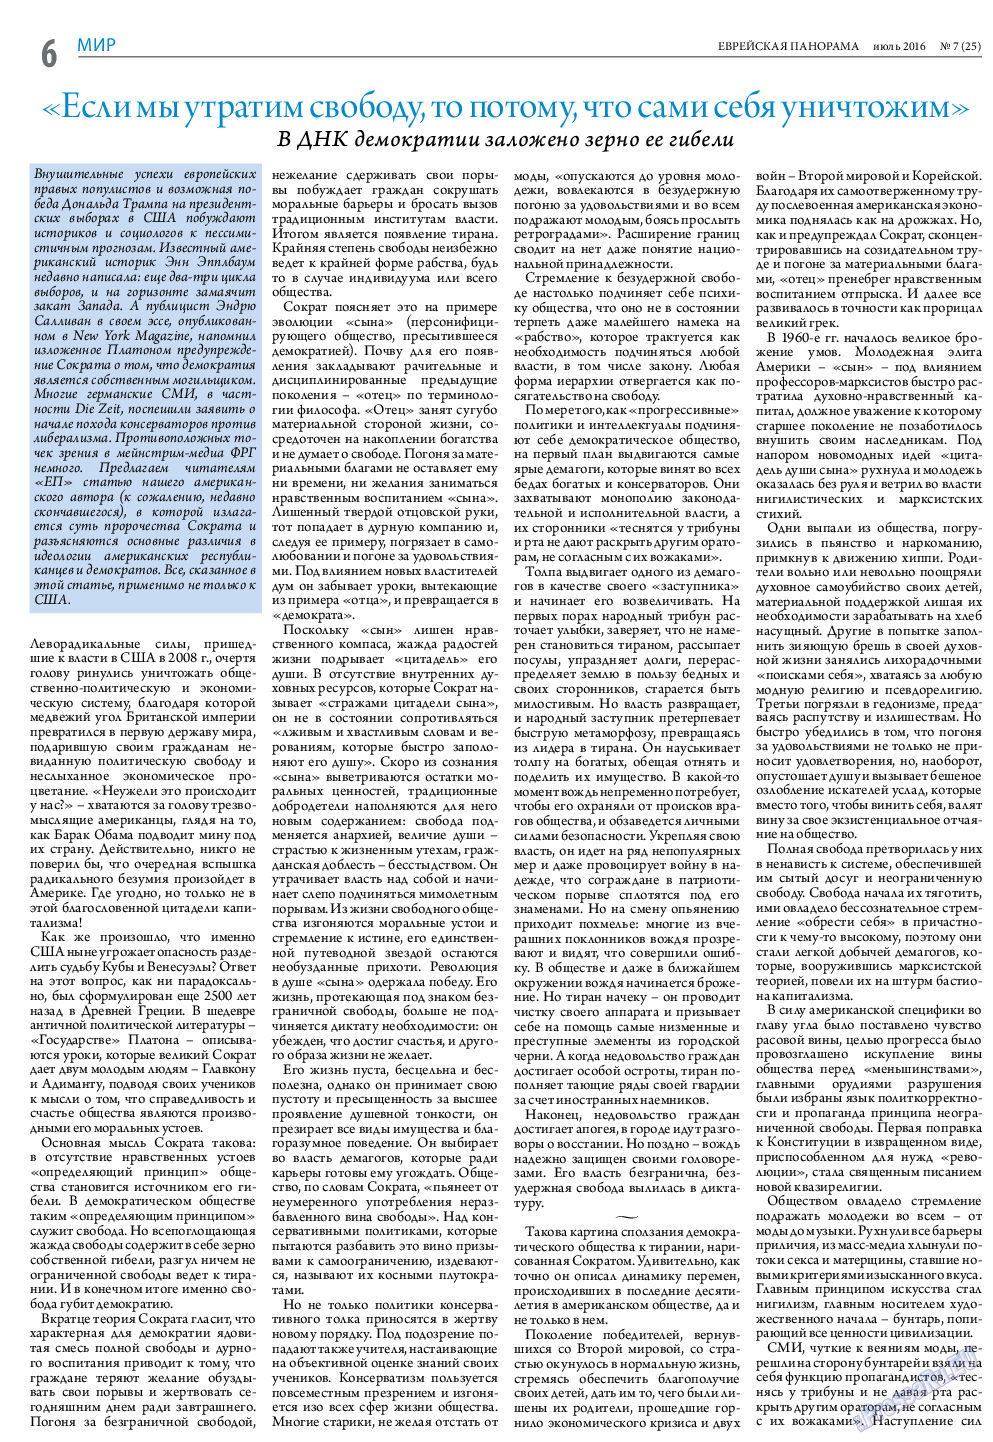 Еврейская панорама, газета. 2016 №7 стр.6